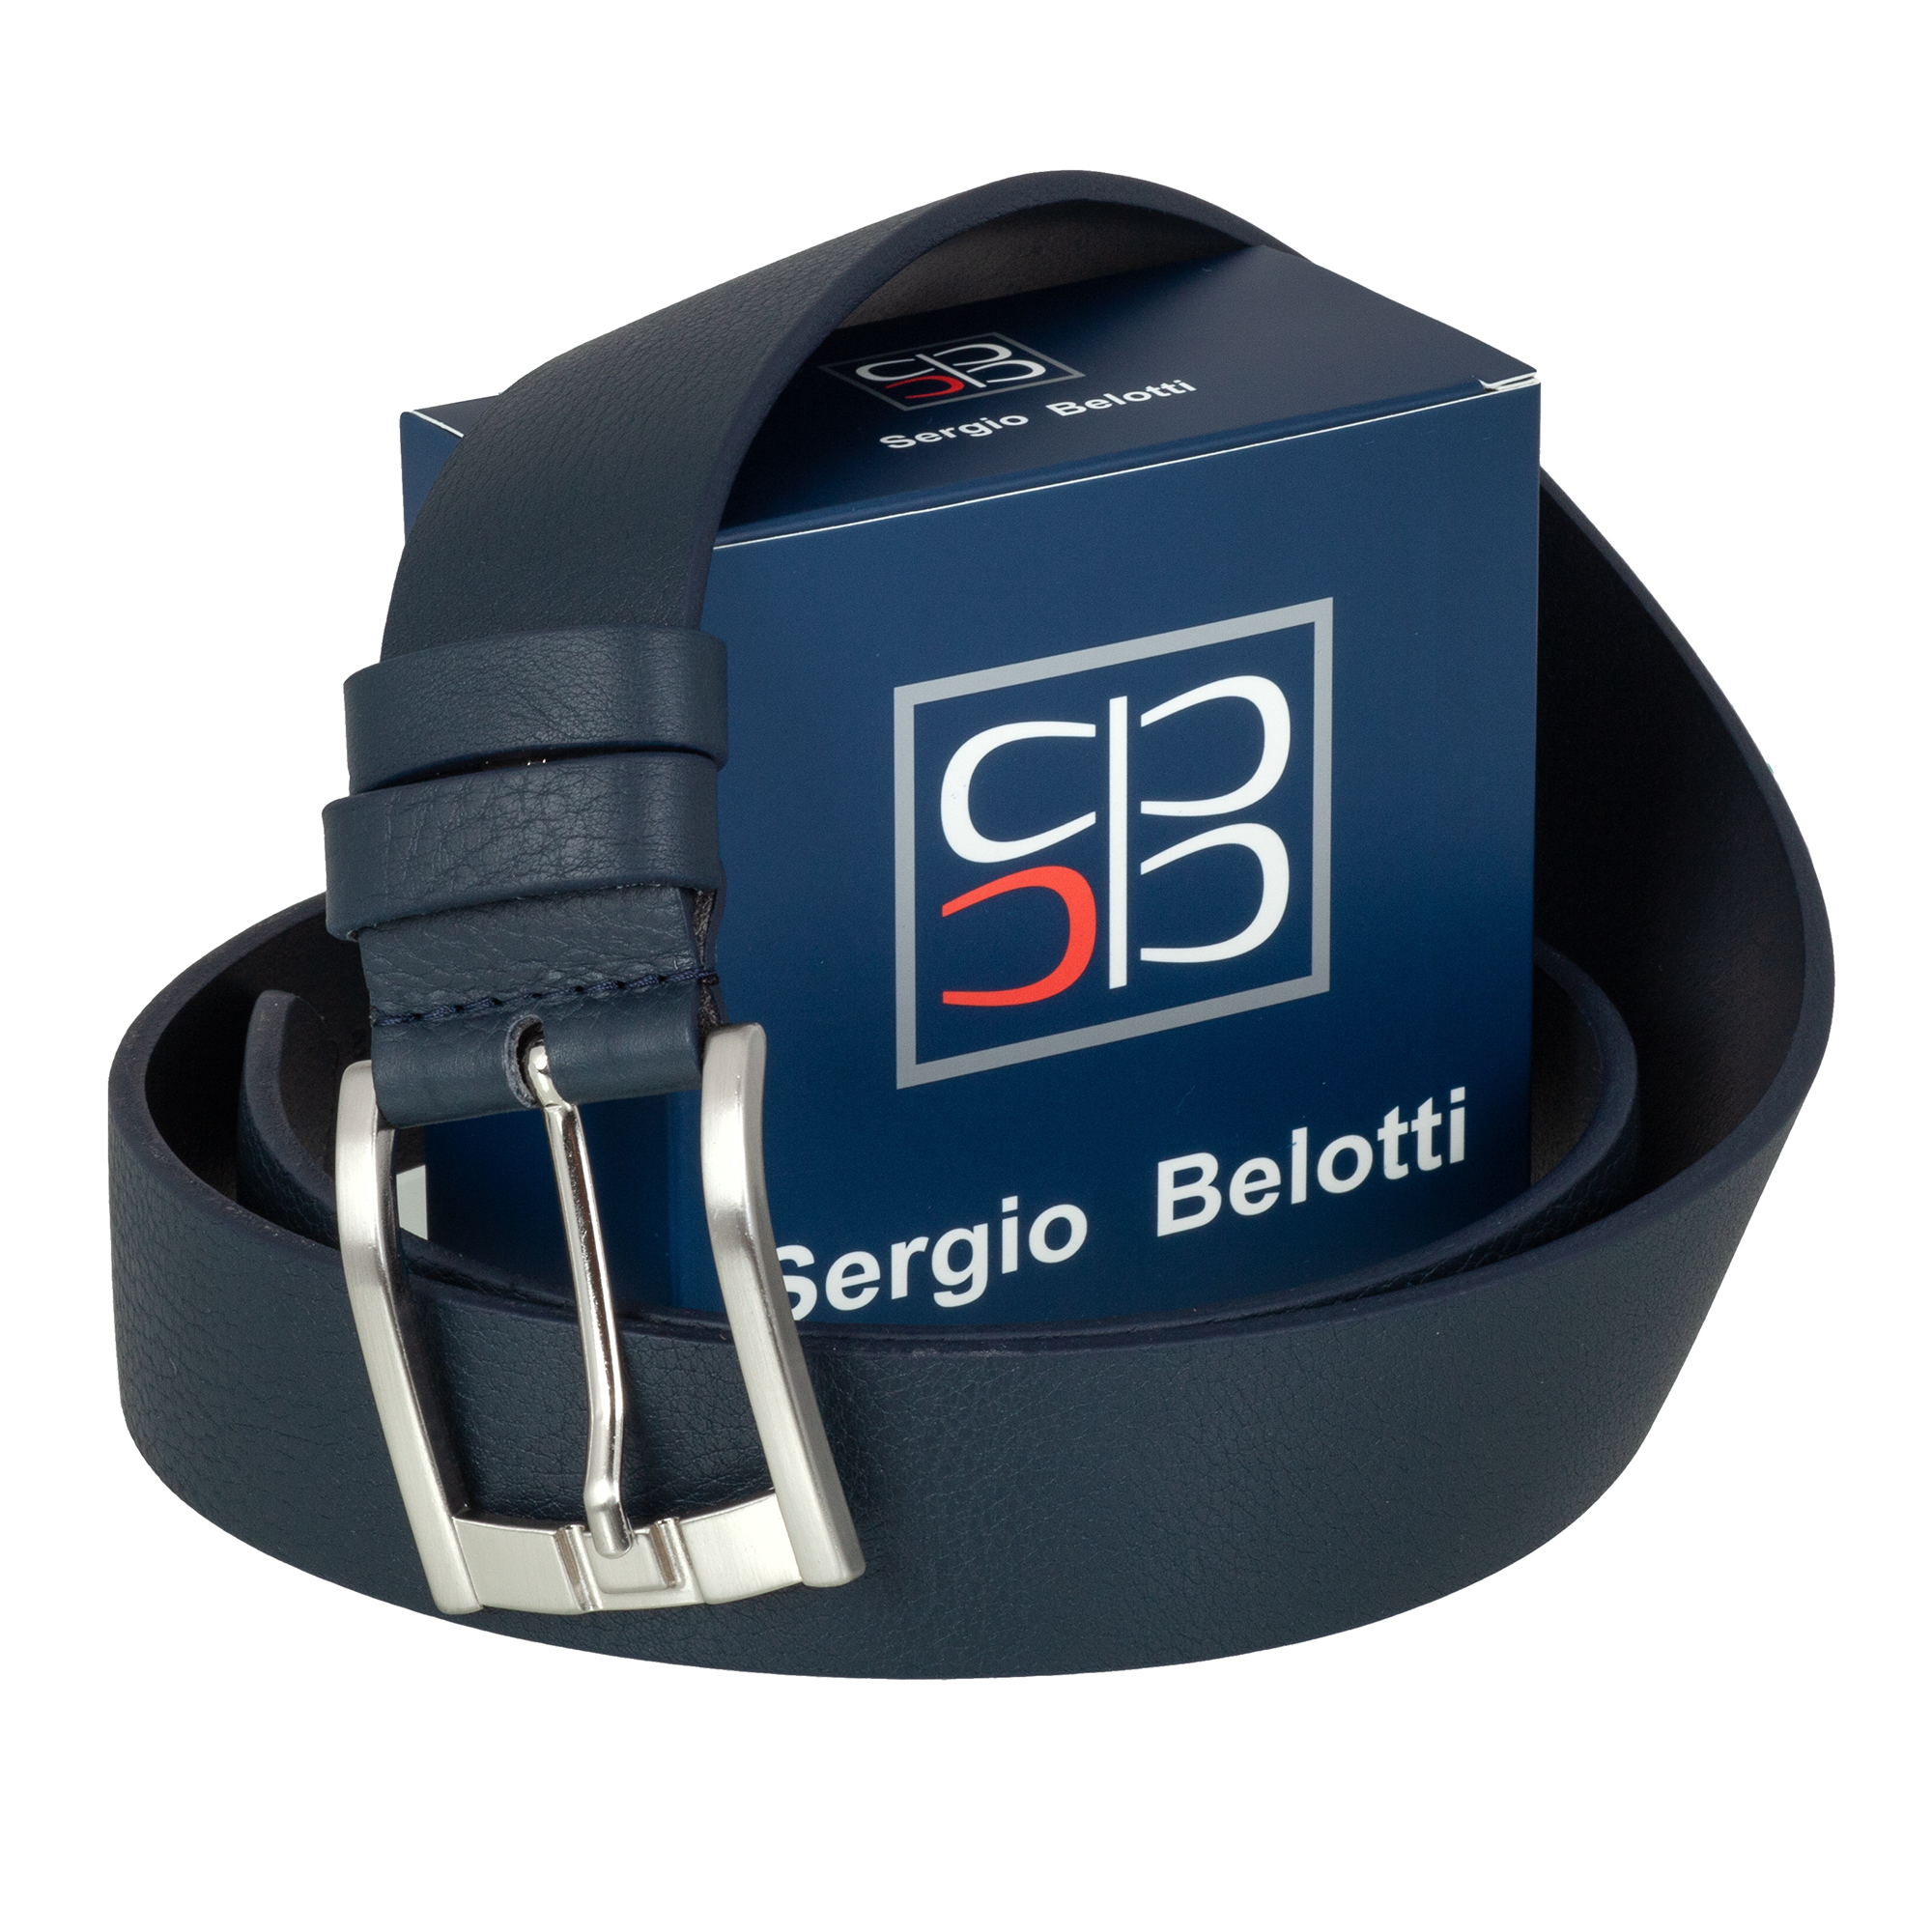 Ремень
Sergio Belotti
2041/40 Navy Ремни и пояса